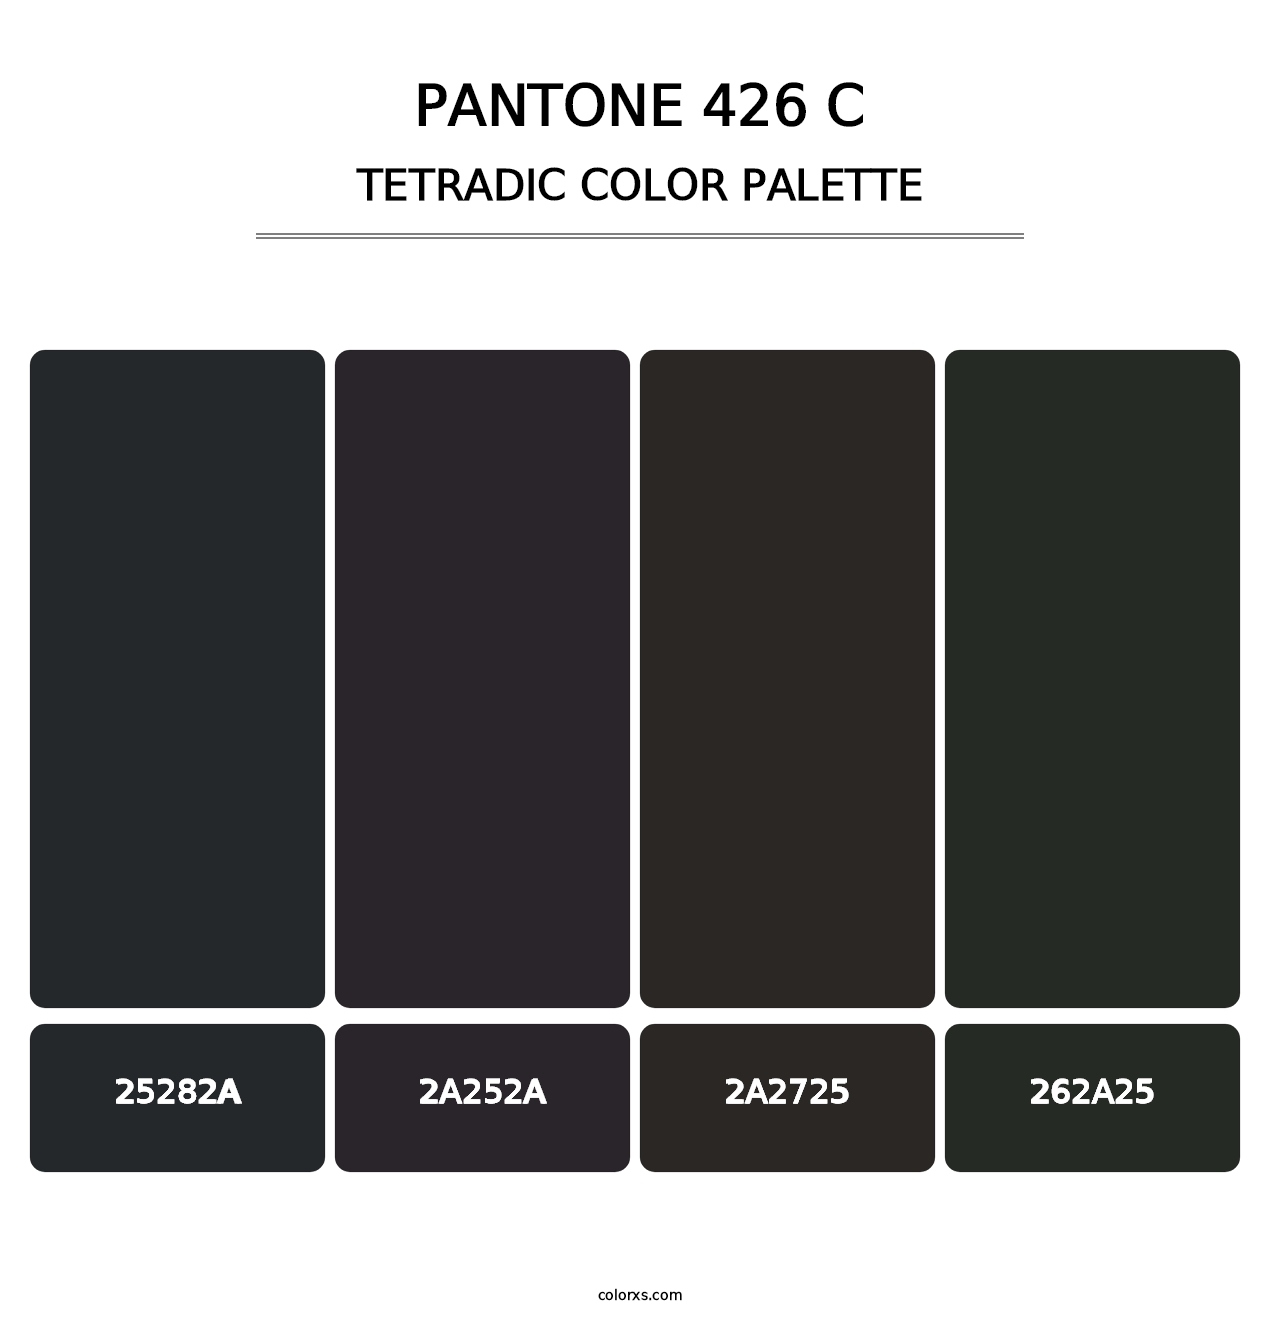 PANTONE 426 C - Tetradic Color Palette